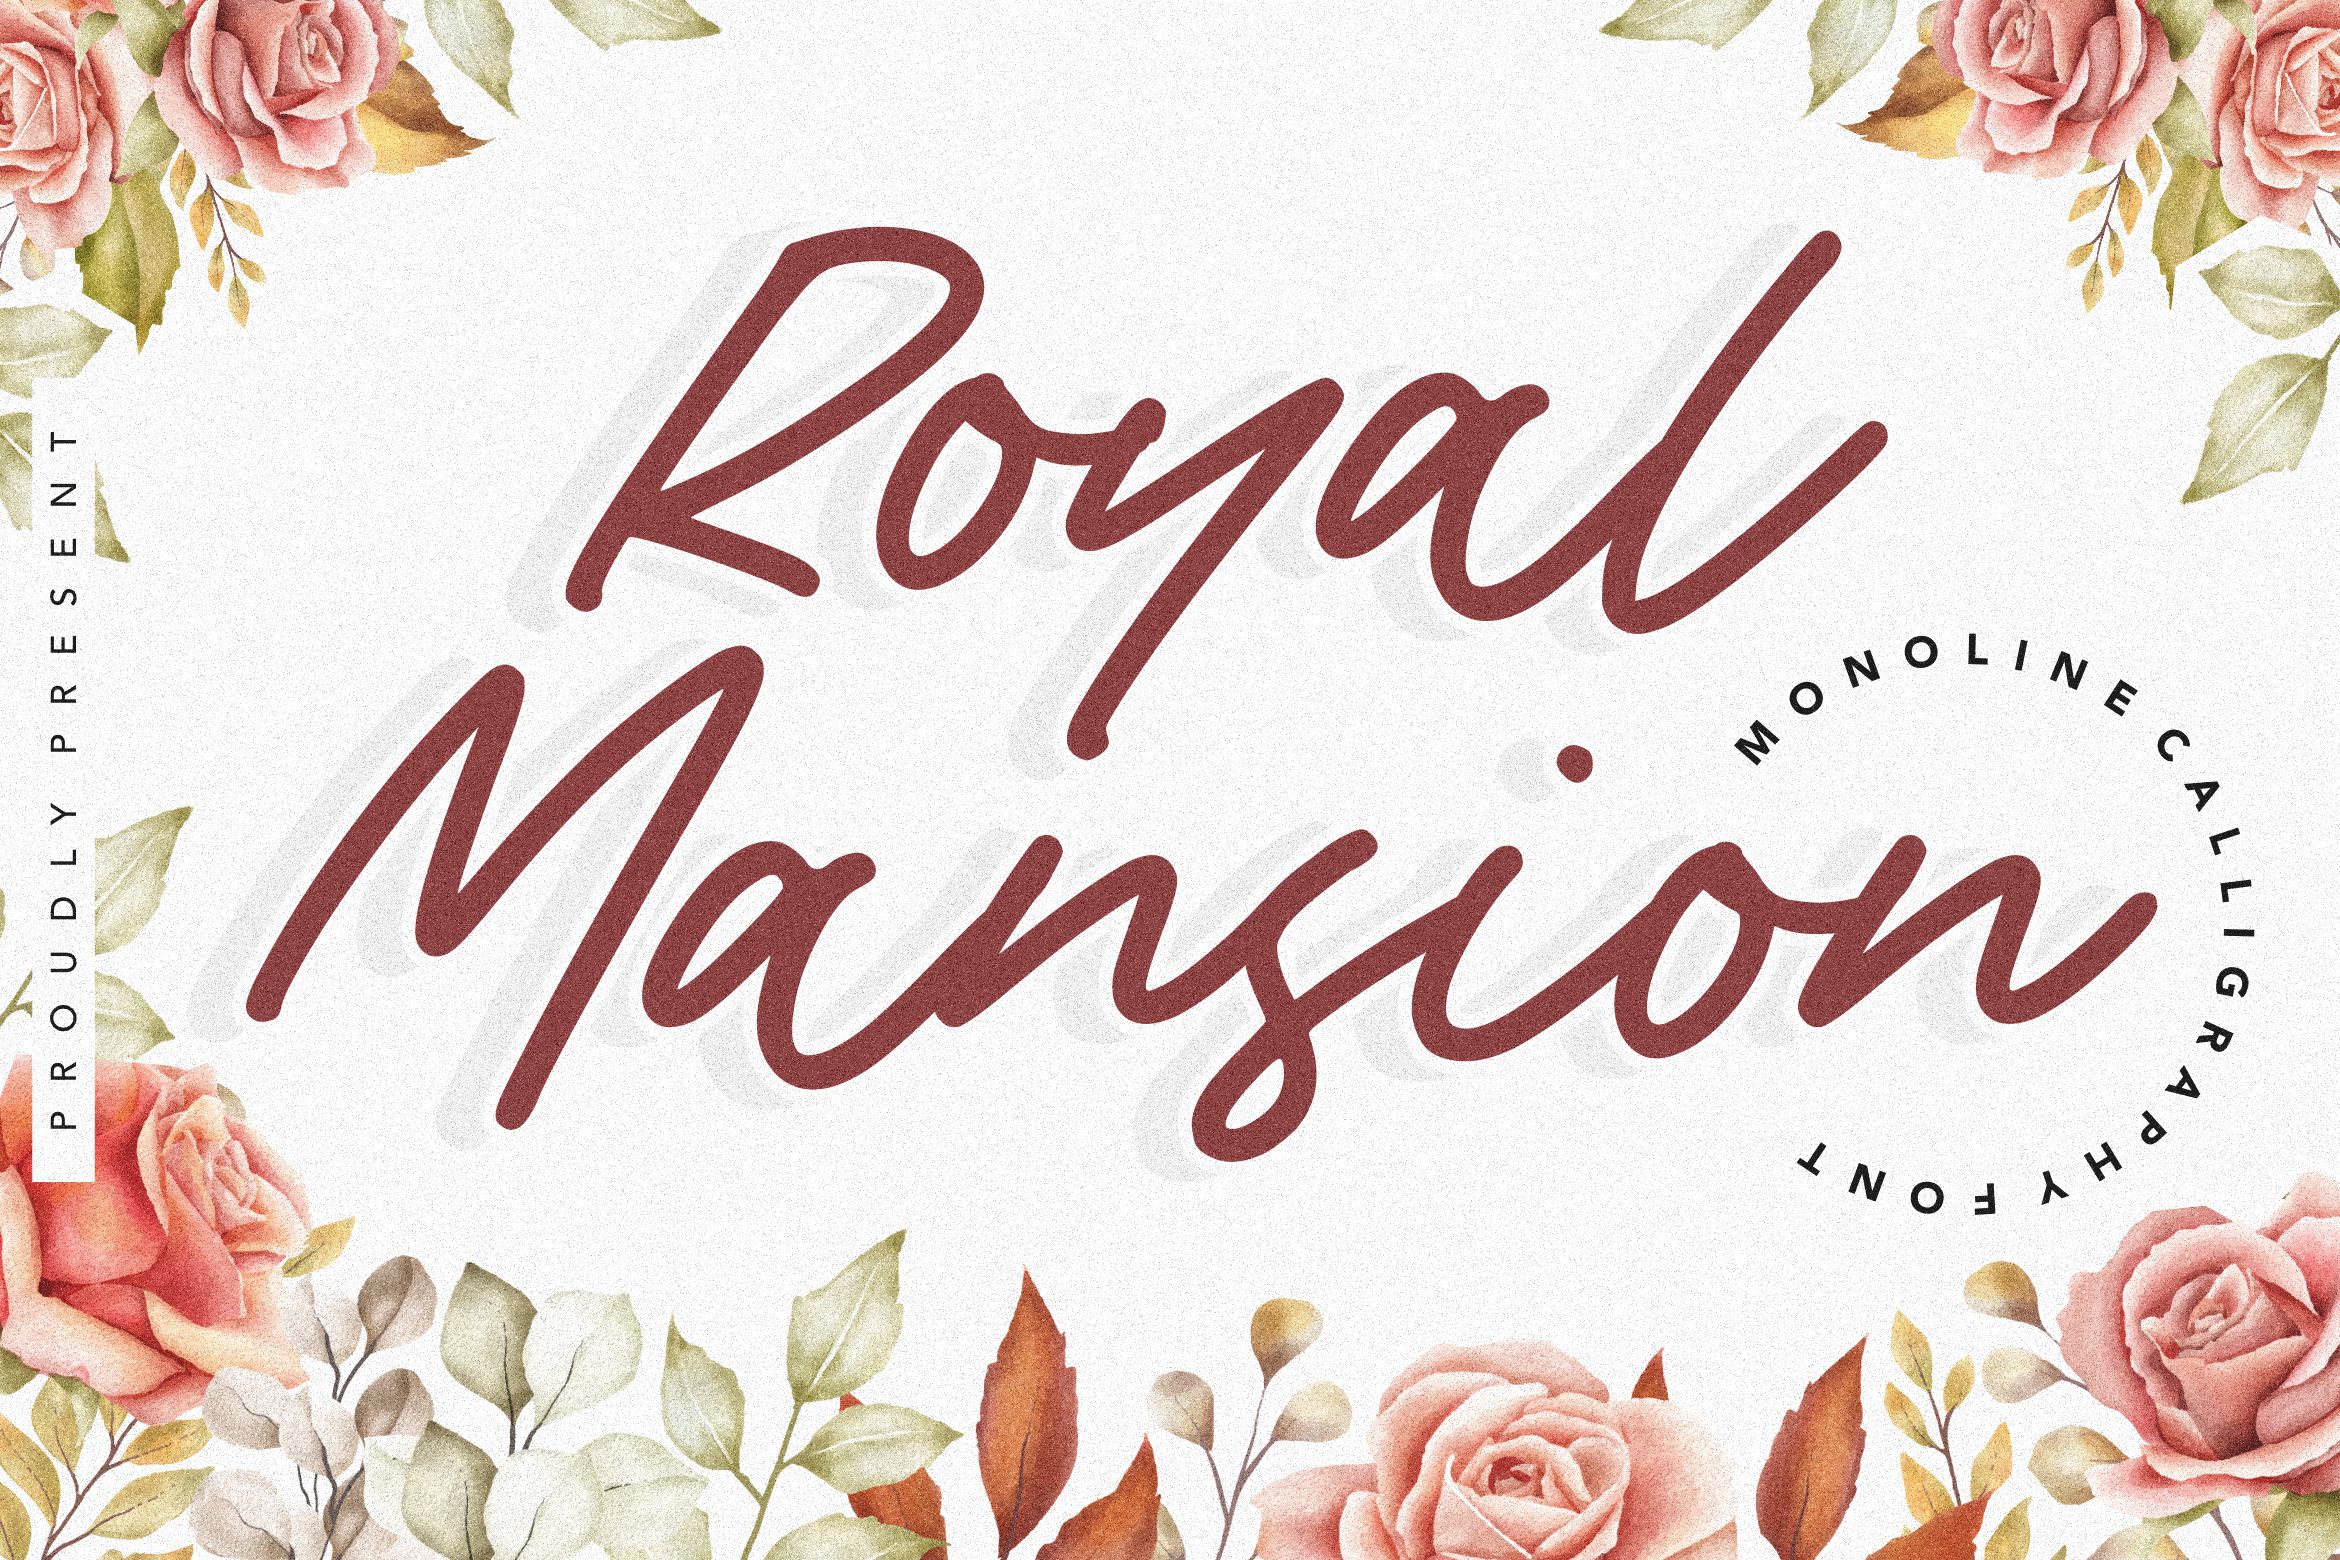 Royal Mansion